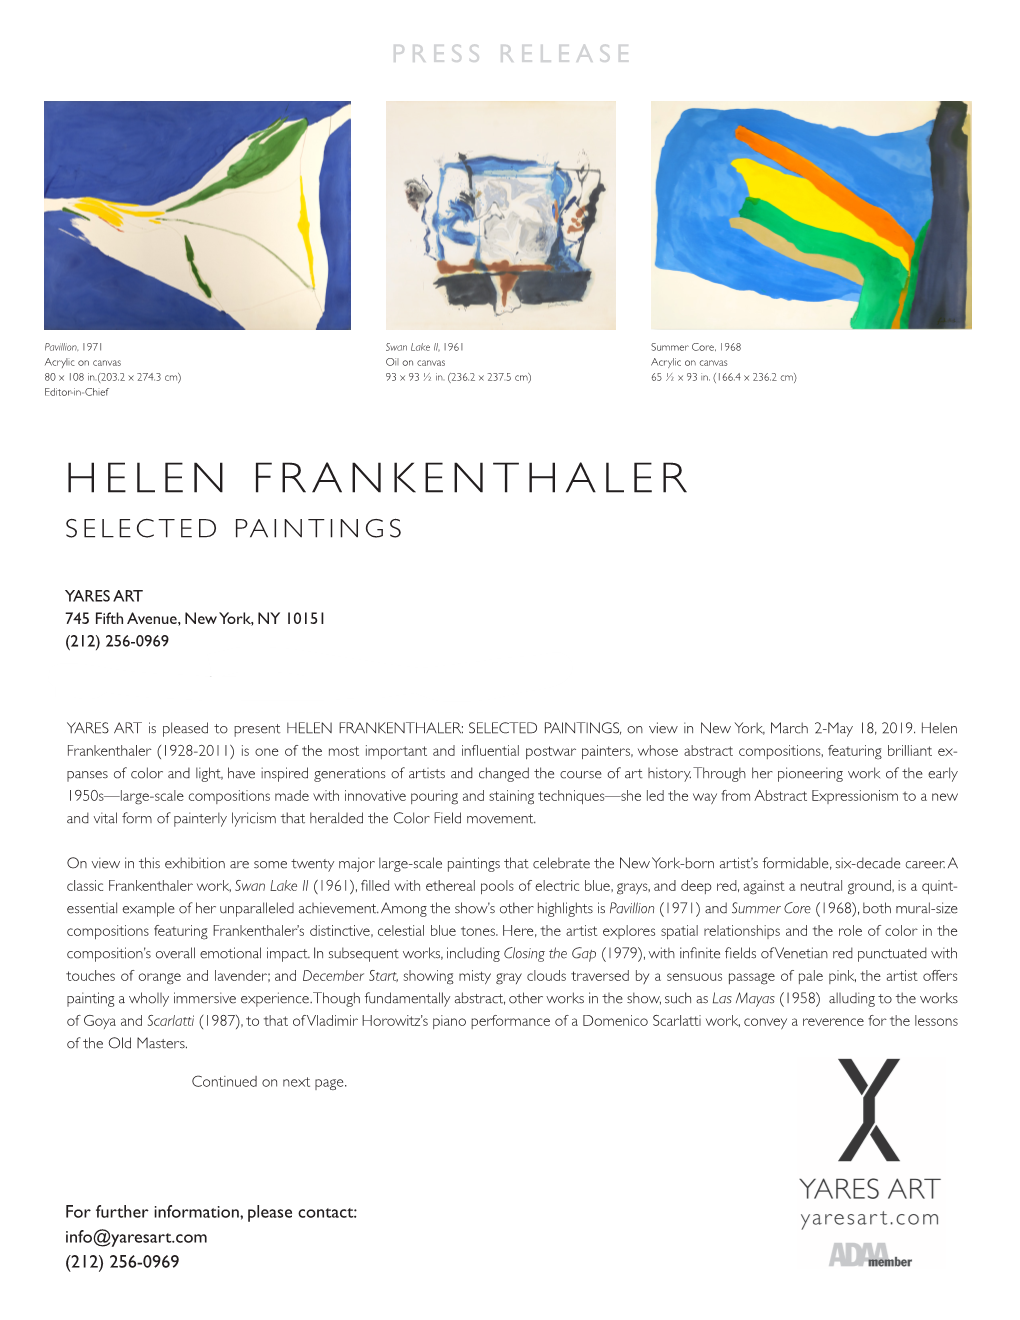 Helen Frankenthaler Selected Paintings